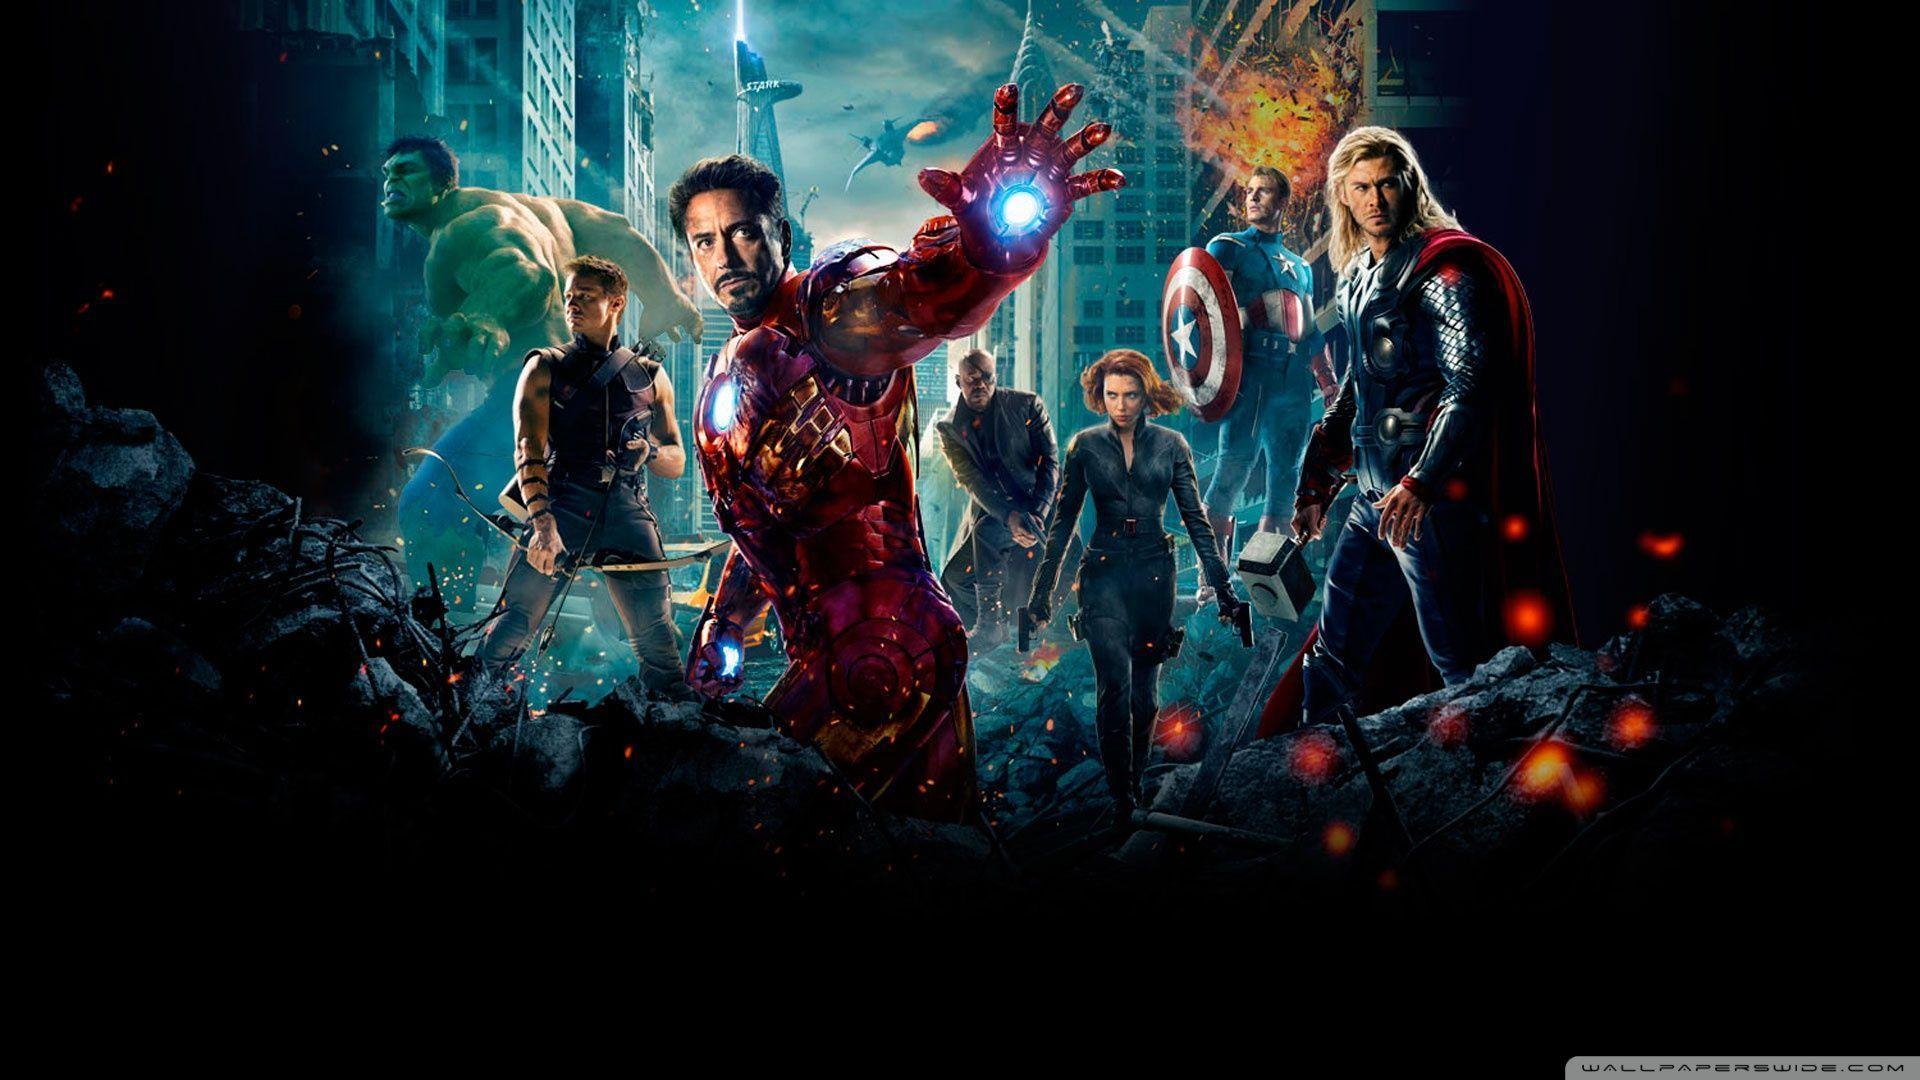 The Avengers HD Wallpaper Free Download. HD Free Wallpaper Download